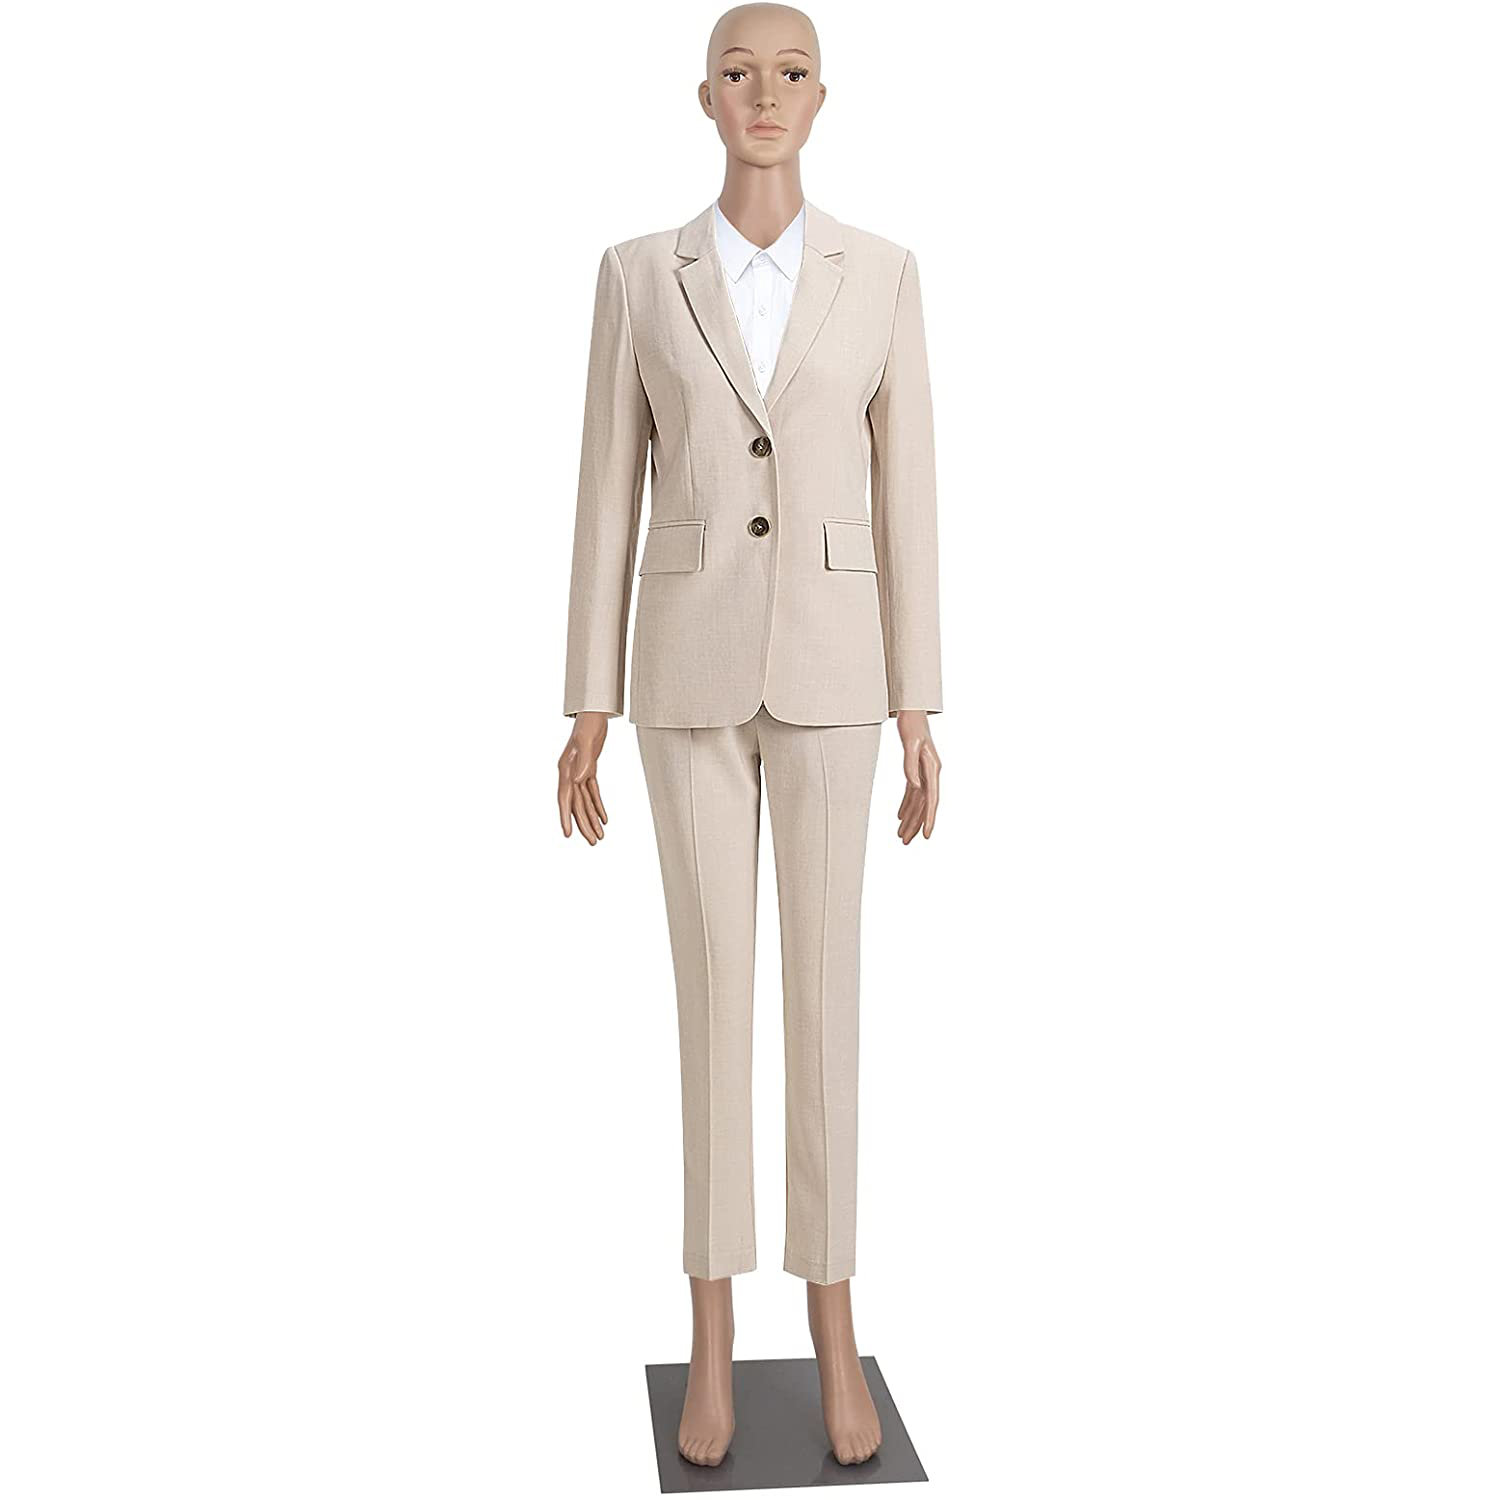 kinbor Full Body Female Mannequin - Woman Dress Form Adjustable